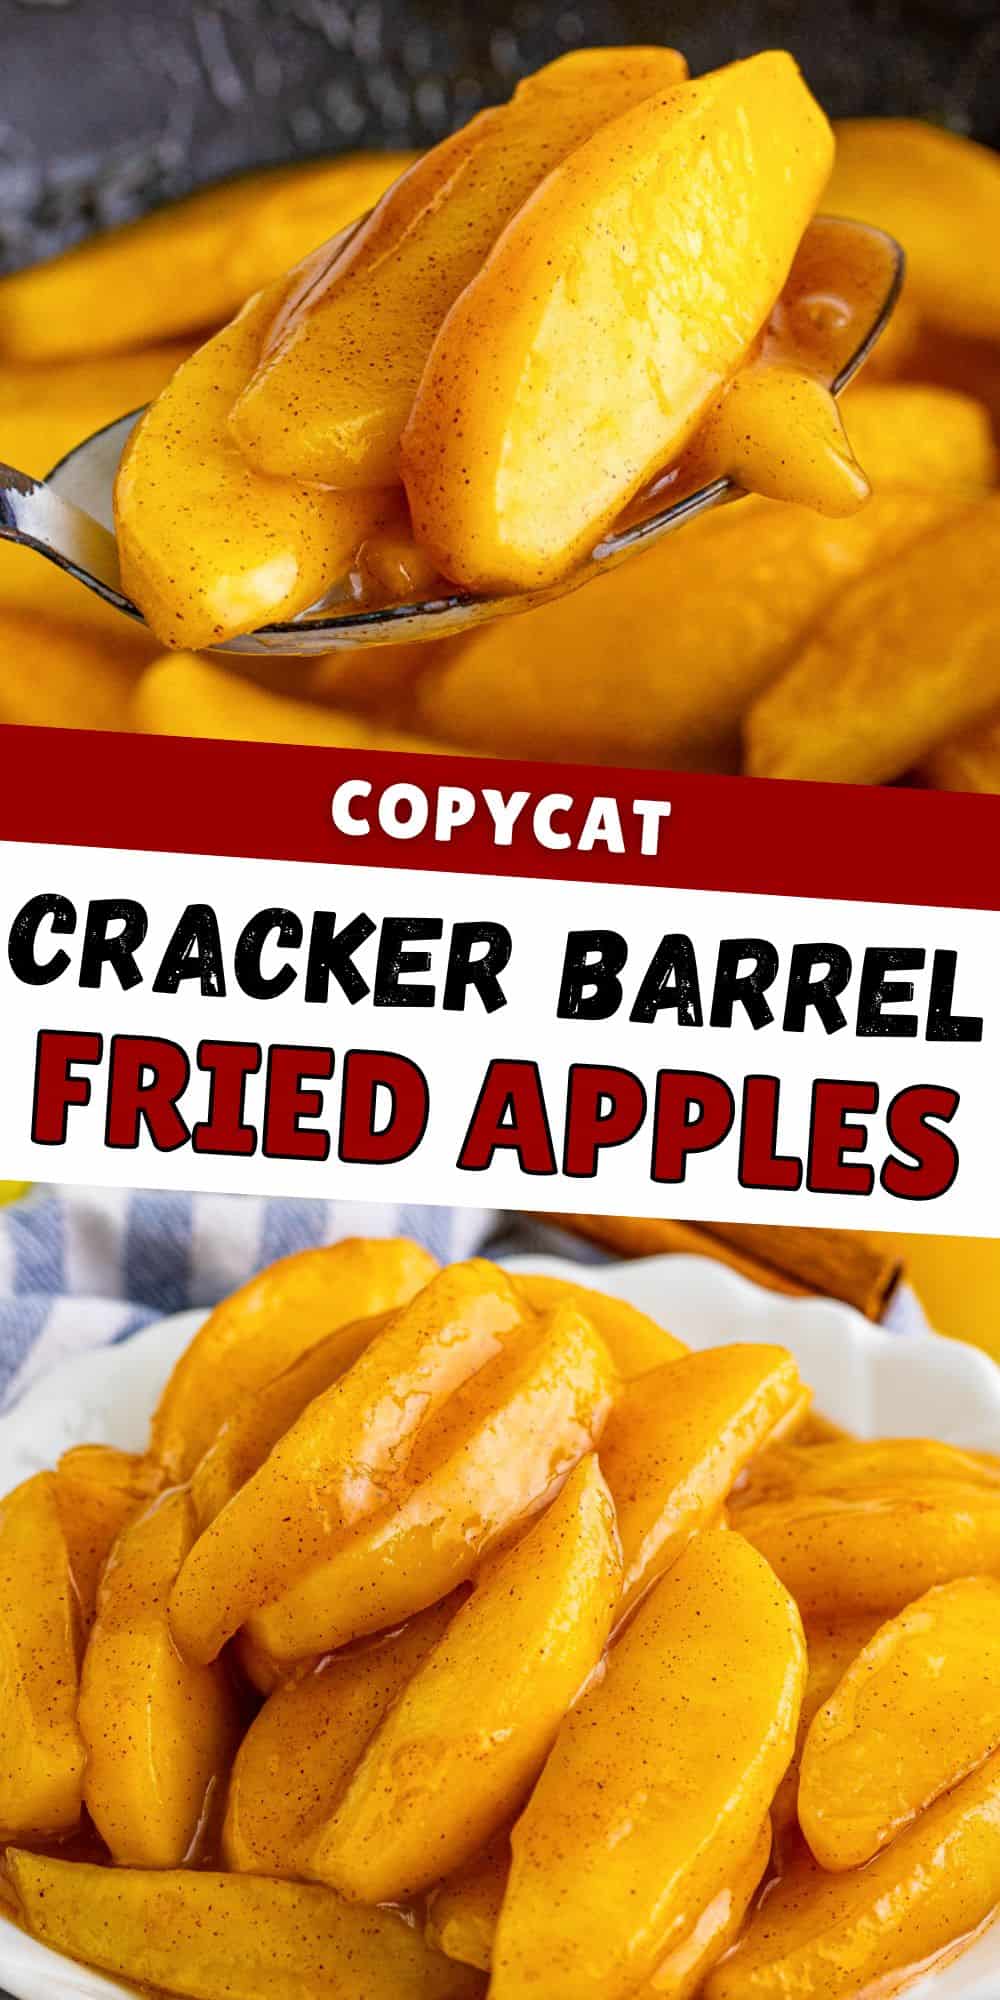 Copycat Cracker Barrel Fried Apples.